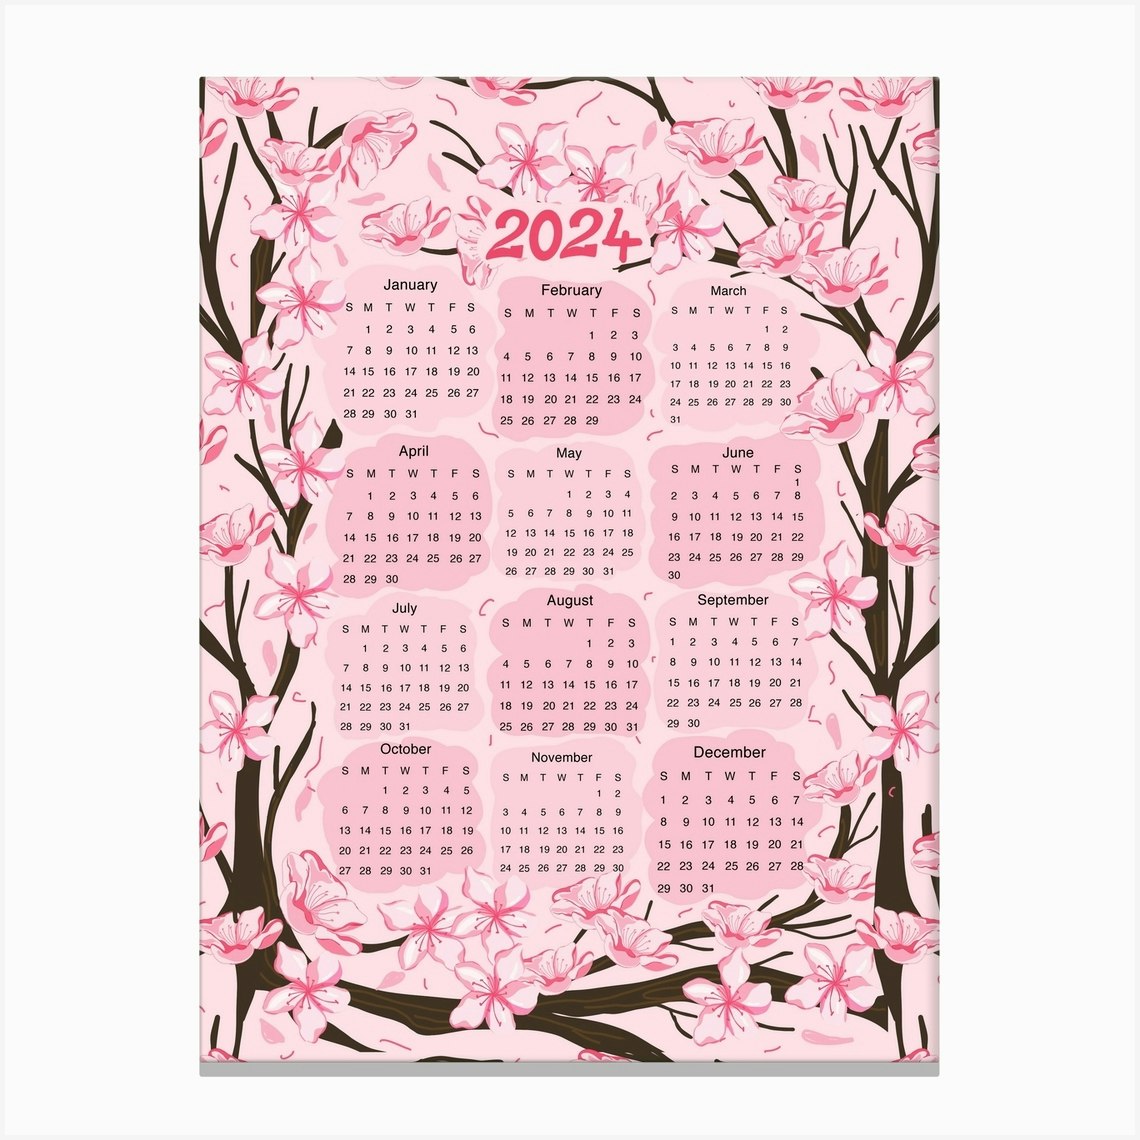 Cherry Blossom Calendar 2024 Canvas Print by Mitalim Designs Fy